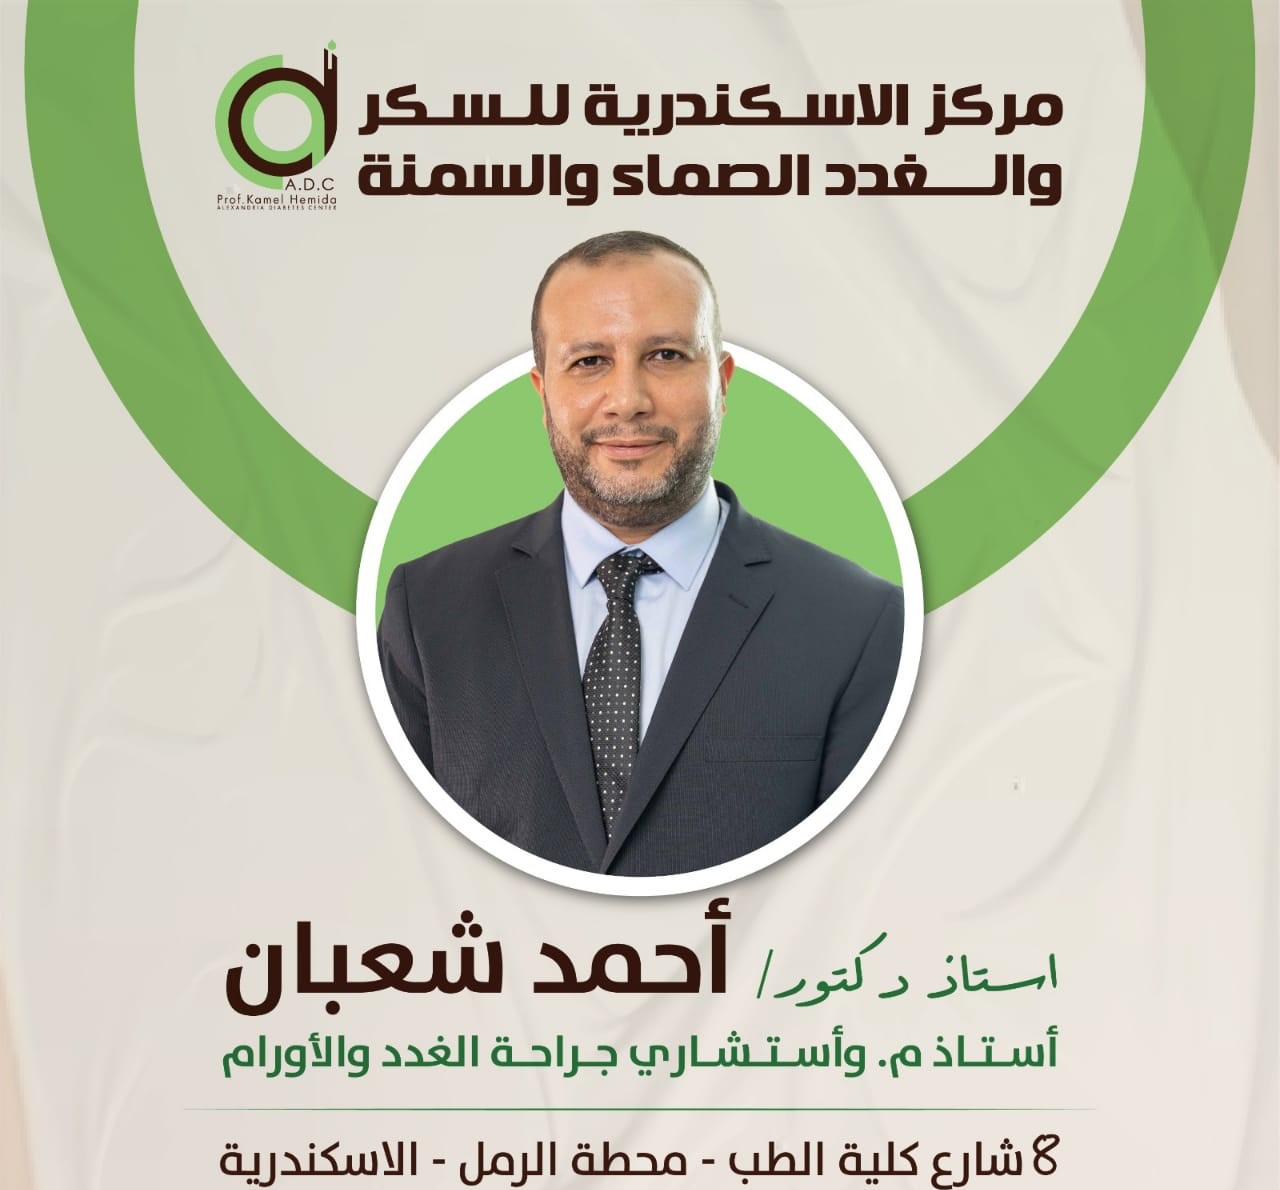 Dr. Ahmed Shabaan